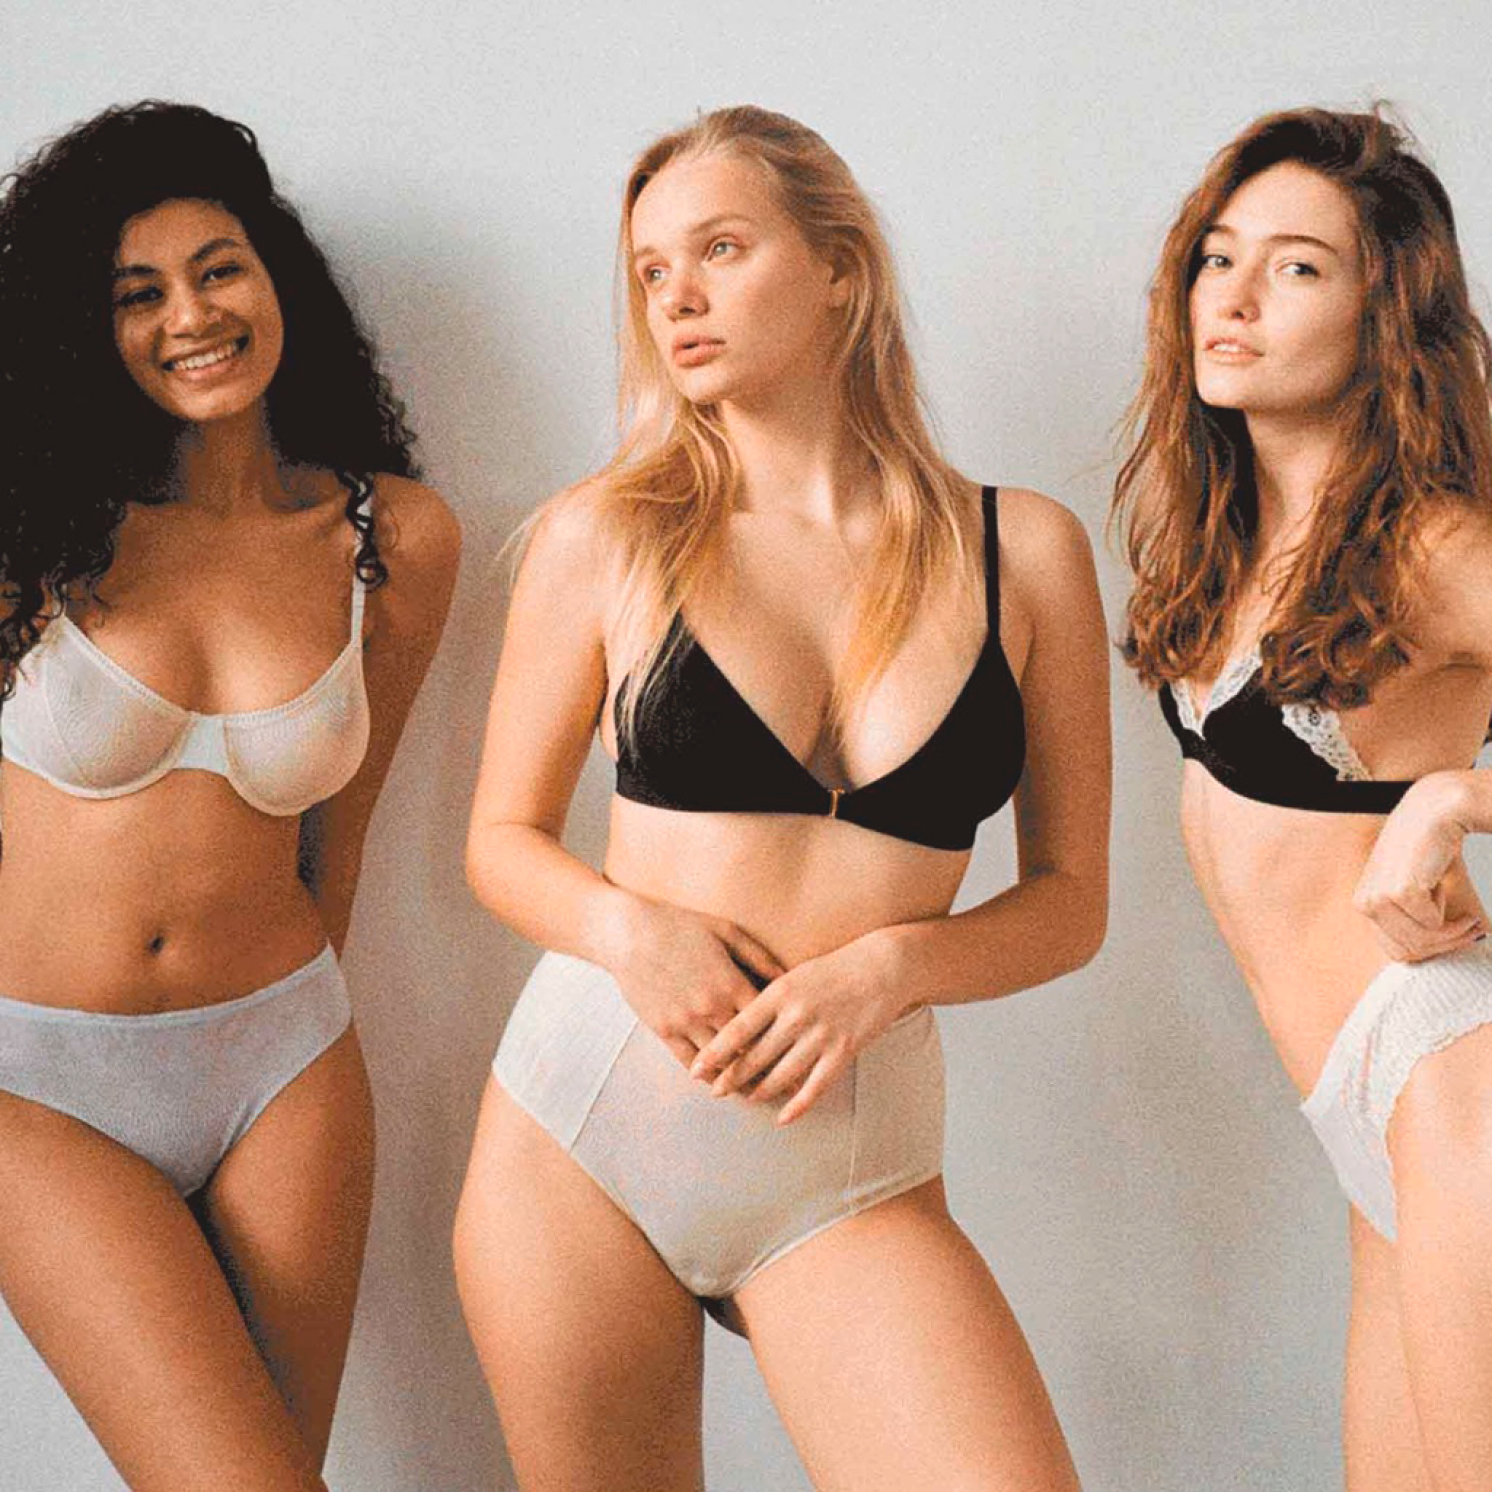 Meet Semi-Romantic, a sustainable luxury lingerie brand for women.